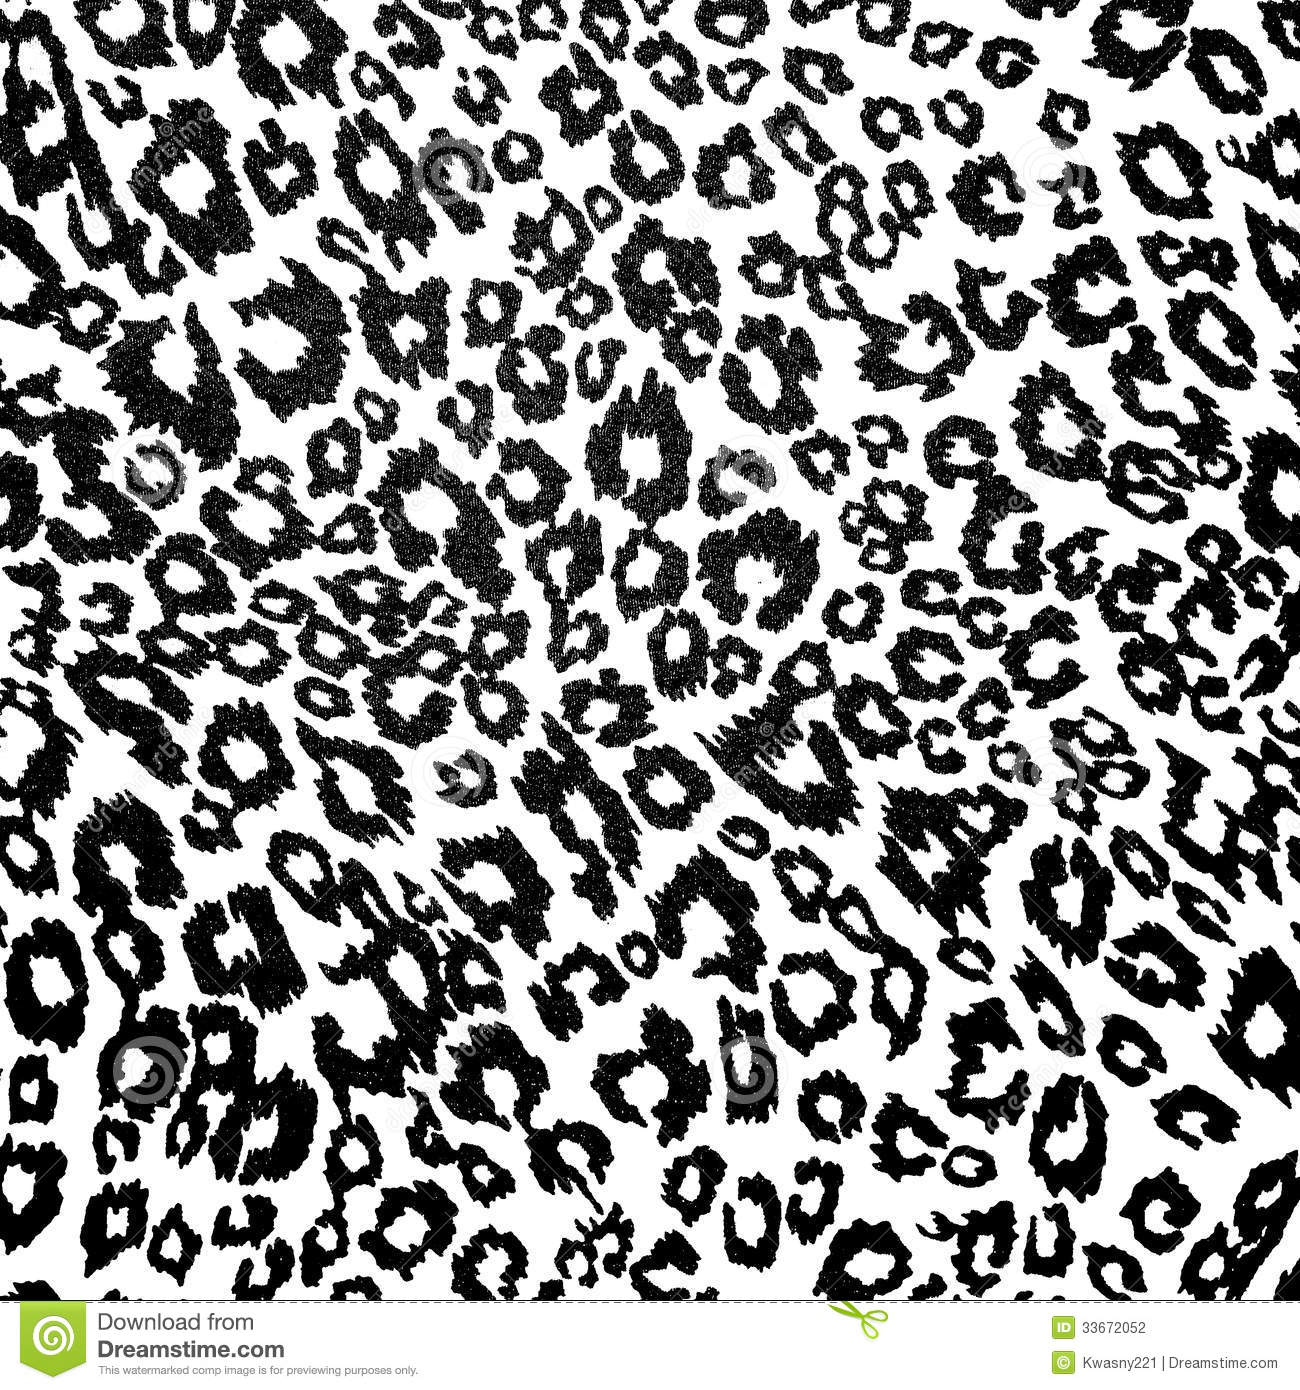 🔥 [42+] Black and White Spotted Wallpaper | WallpaperSafari